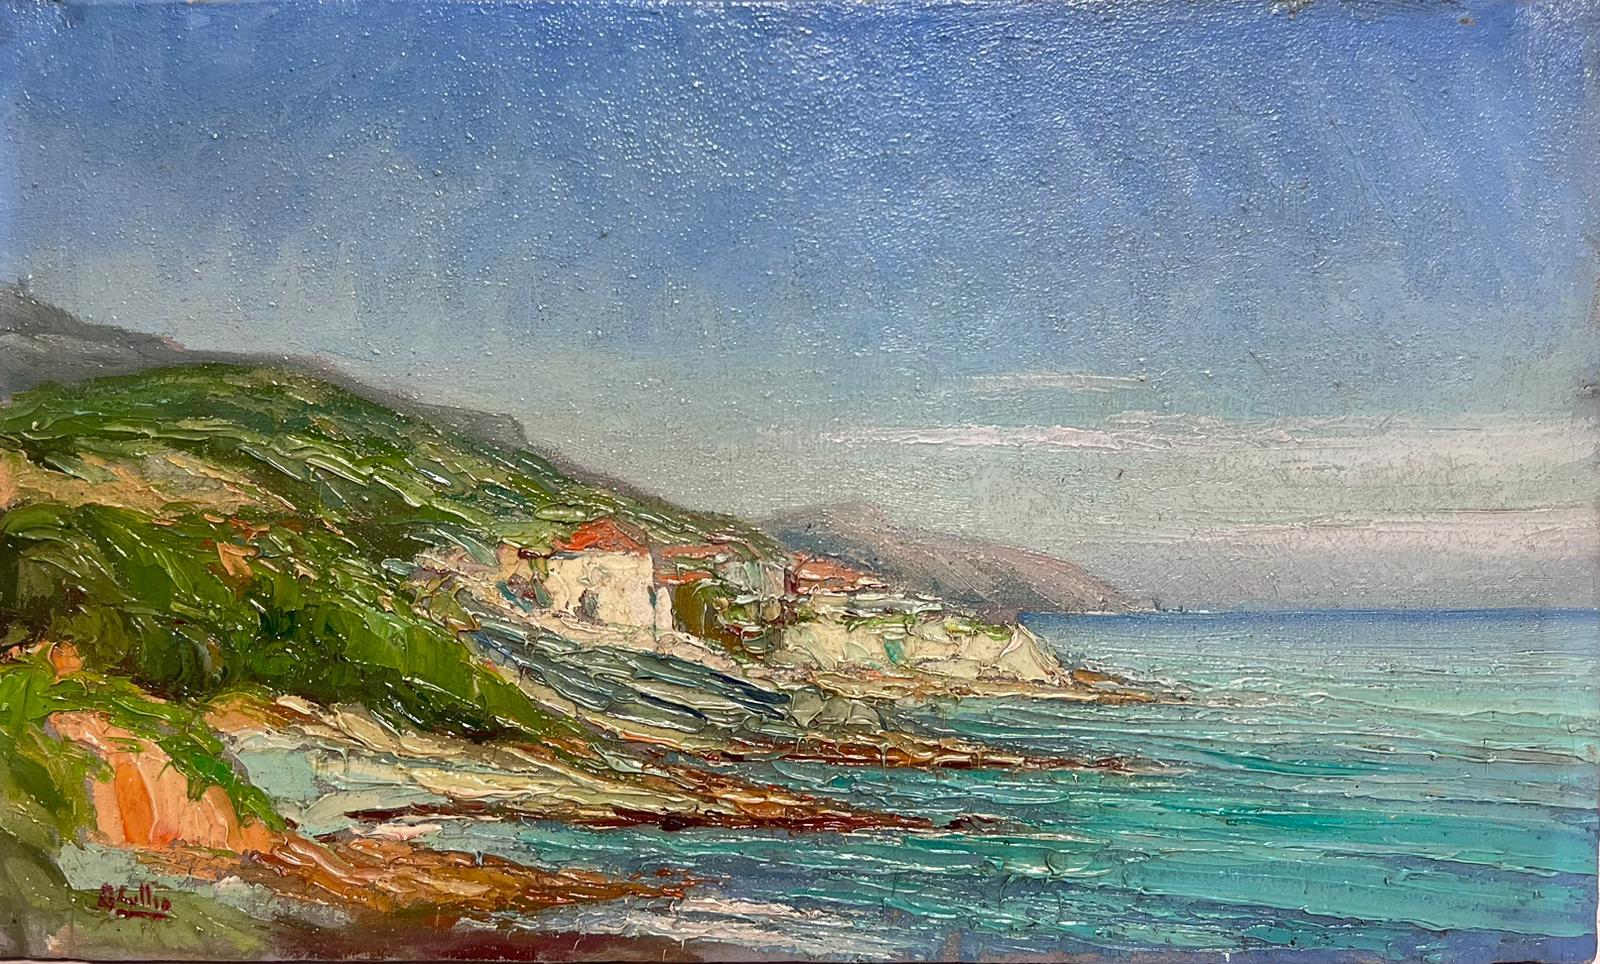 1900's Italian Landscape Painting - The Italian Coastline Turquoise Sea Signed Antique Impressionist Oil Painting